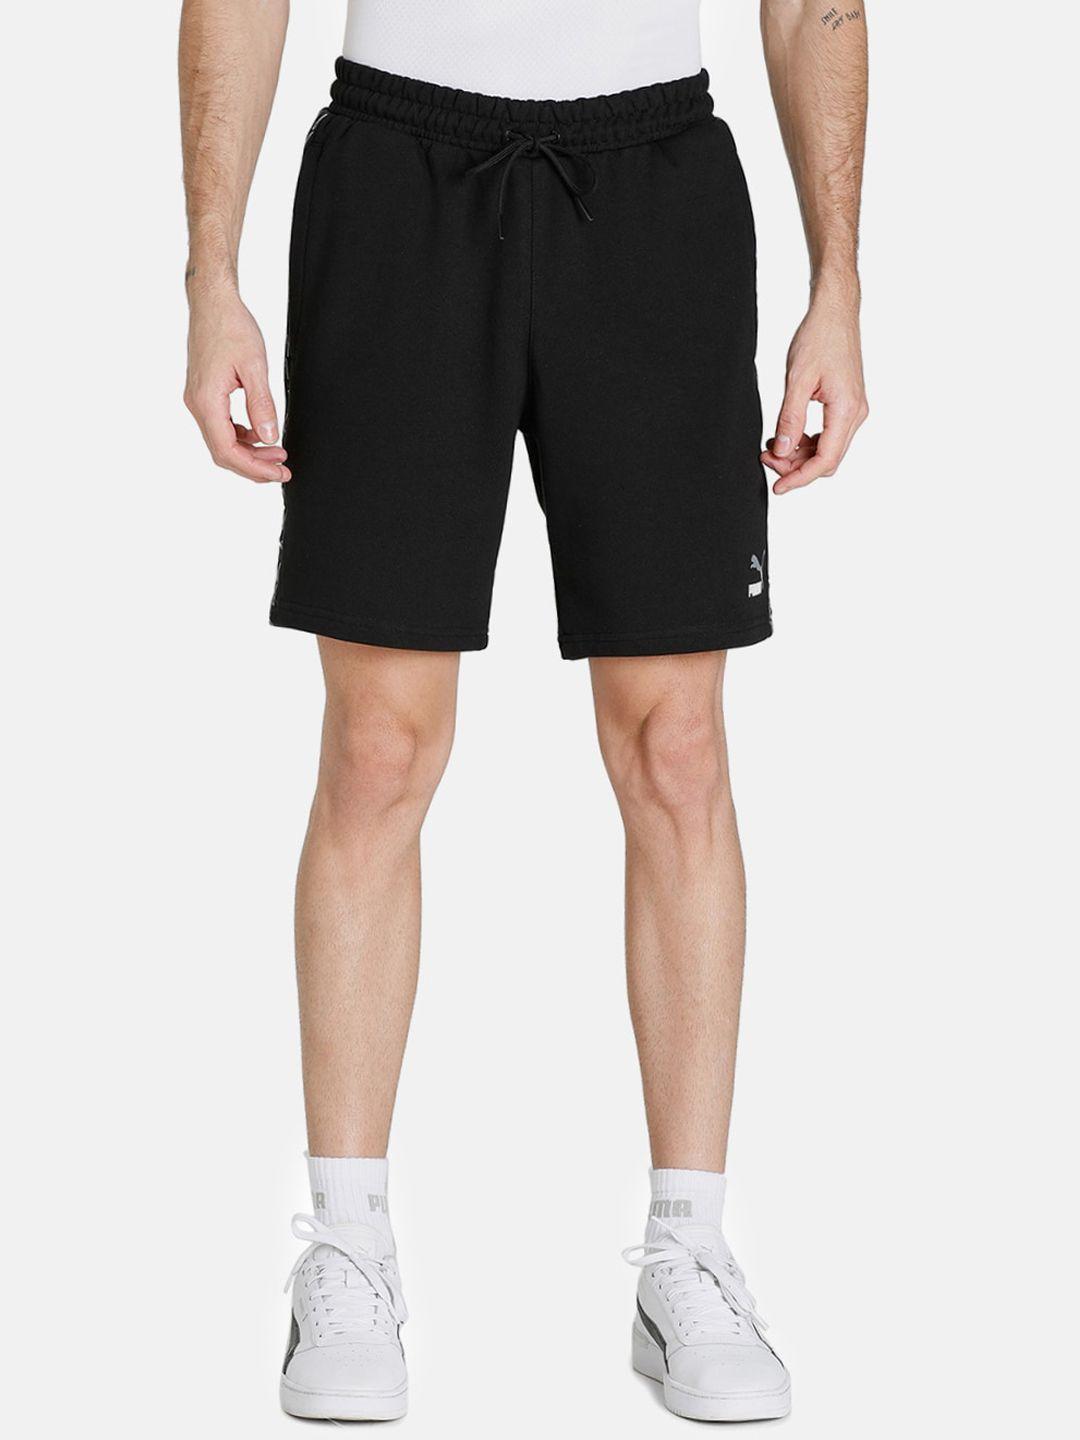 puma-men-black-cotton-sports-shorts